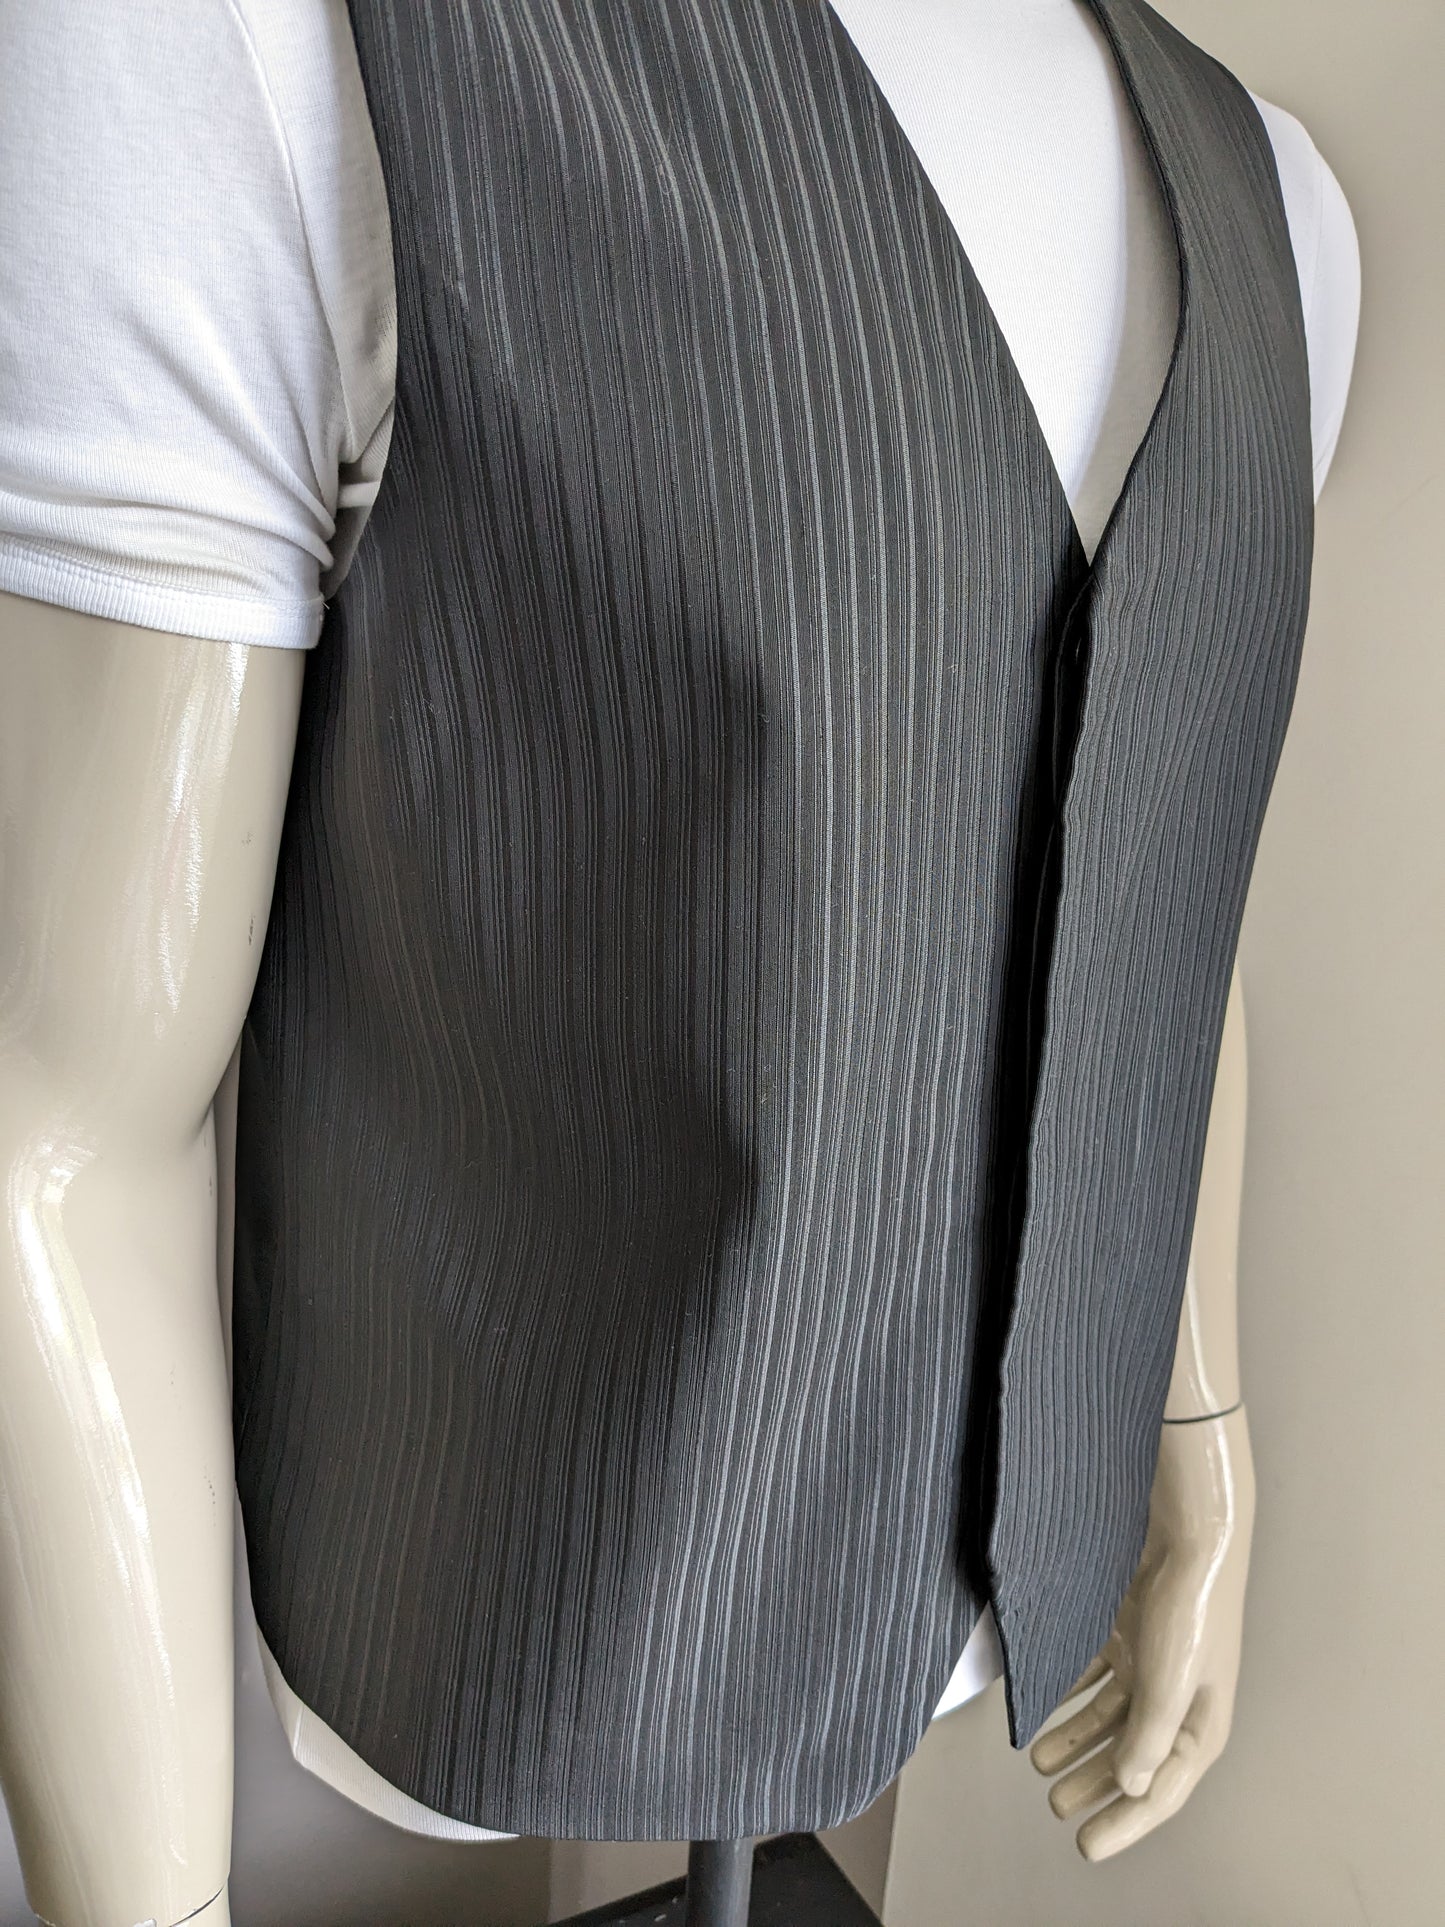 Woolen waistcoat with hidden knots. Black shiny striped. Size M / L.